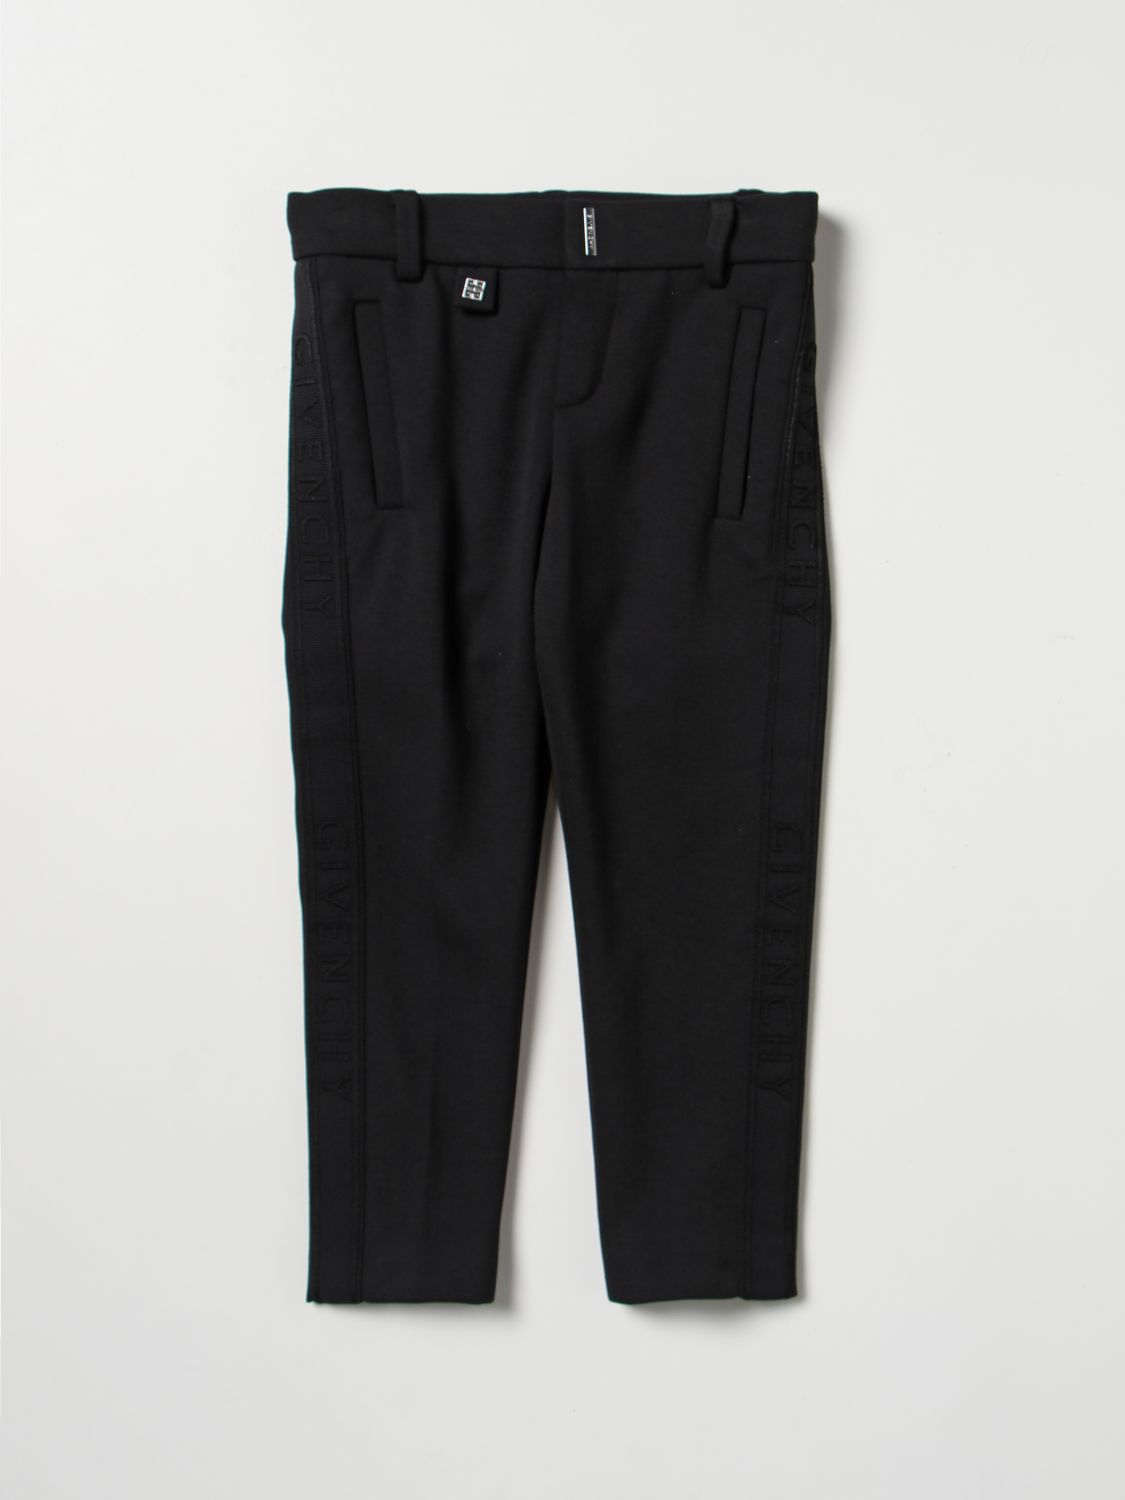 Pants Givenchy: Givenchy cotton blend pants black 1